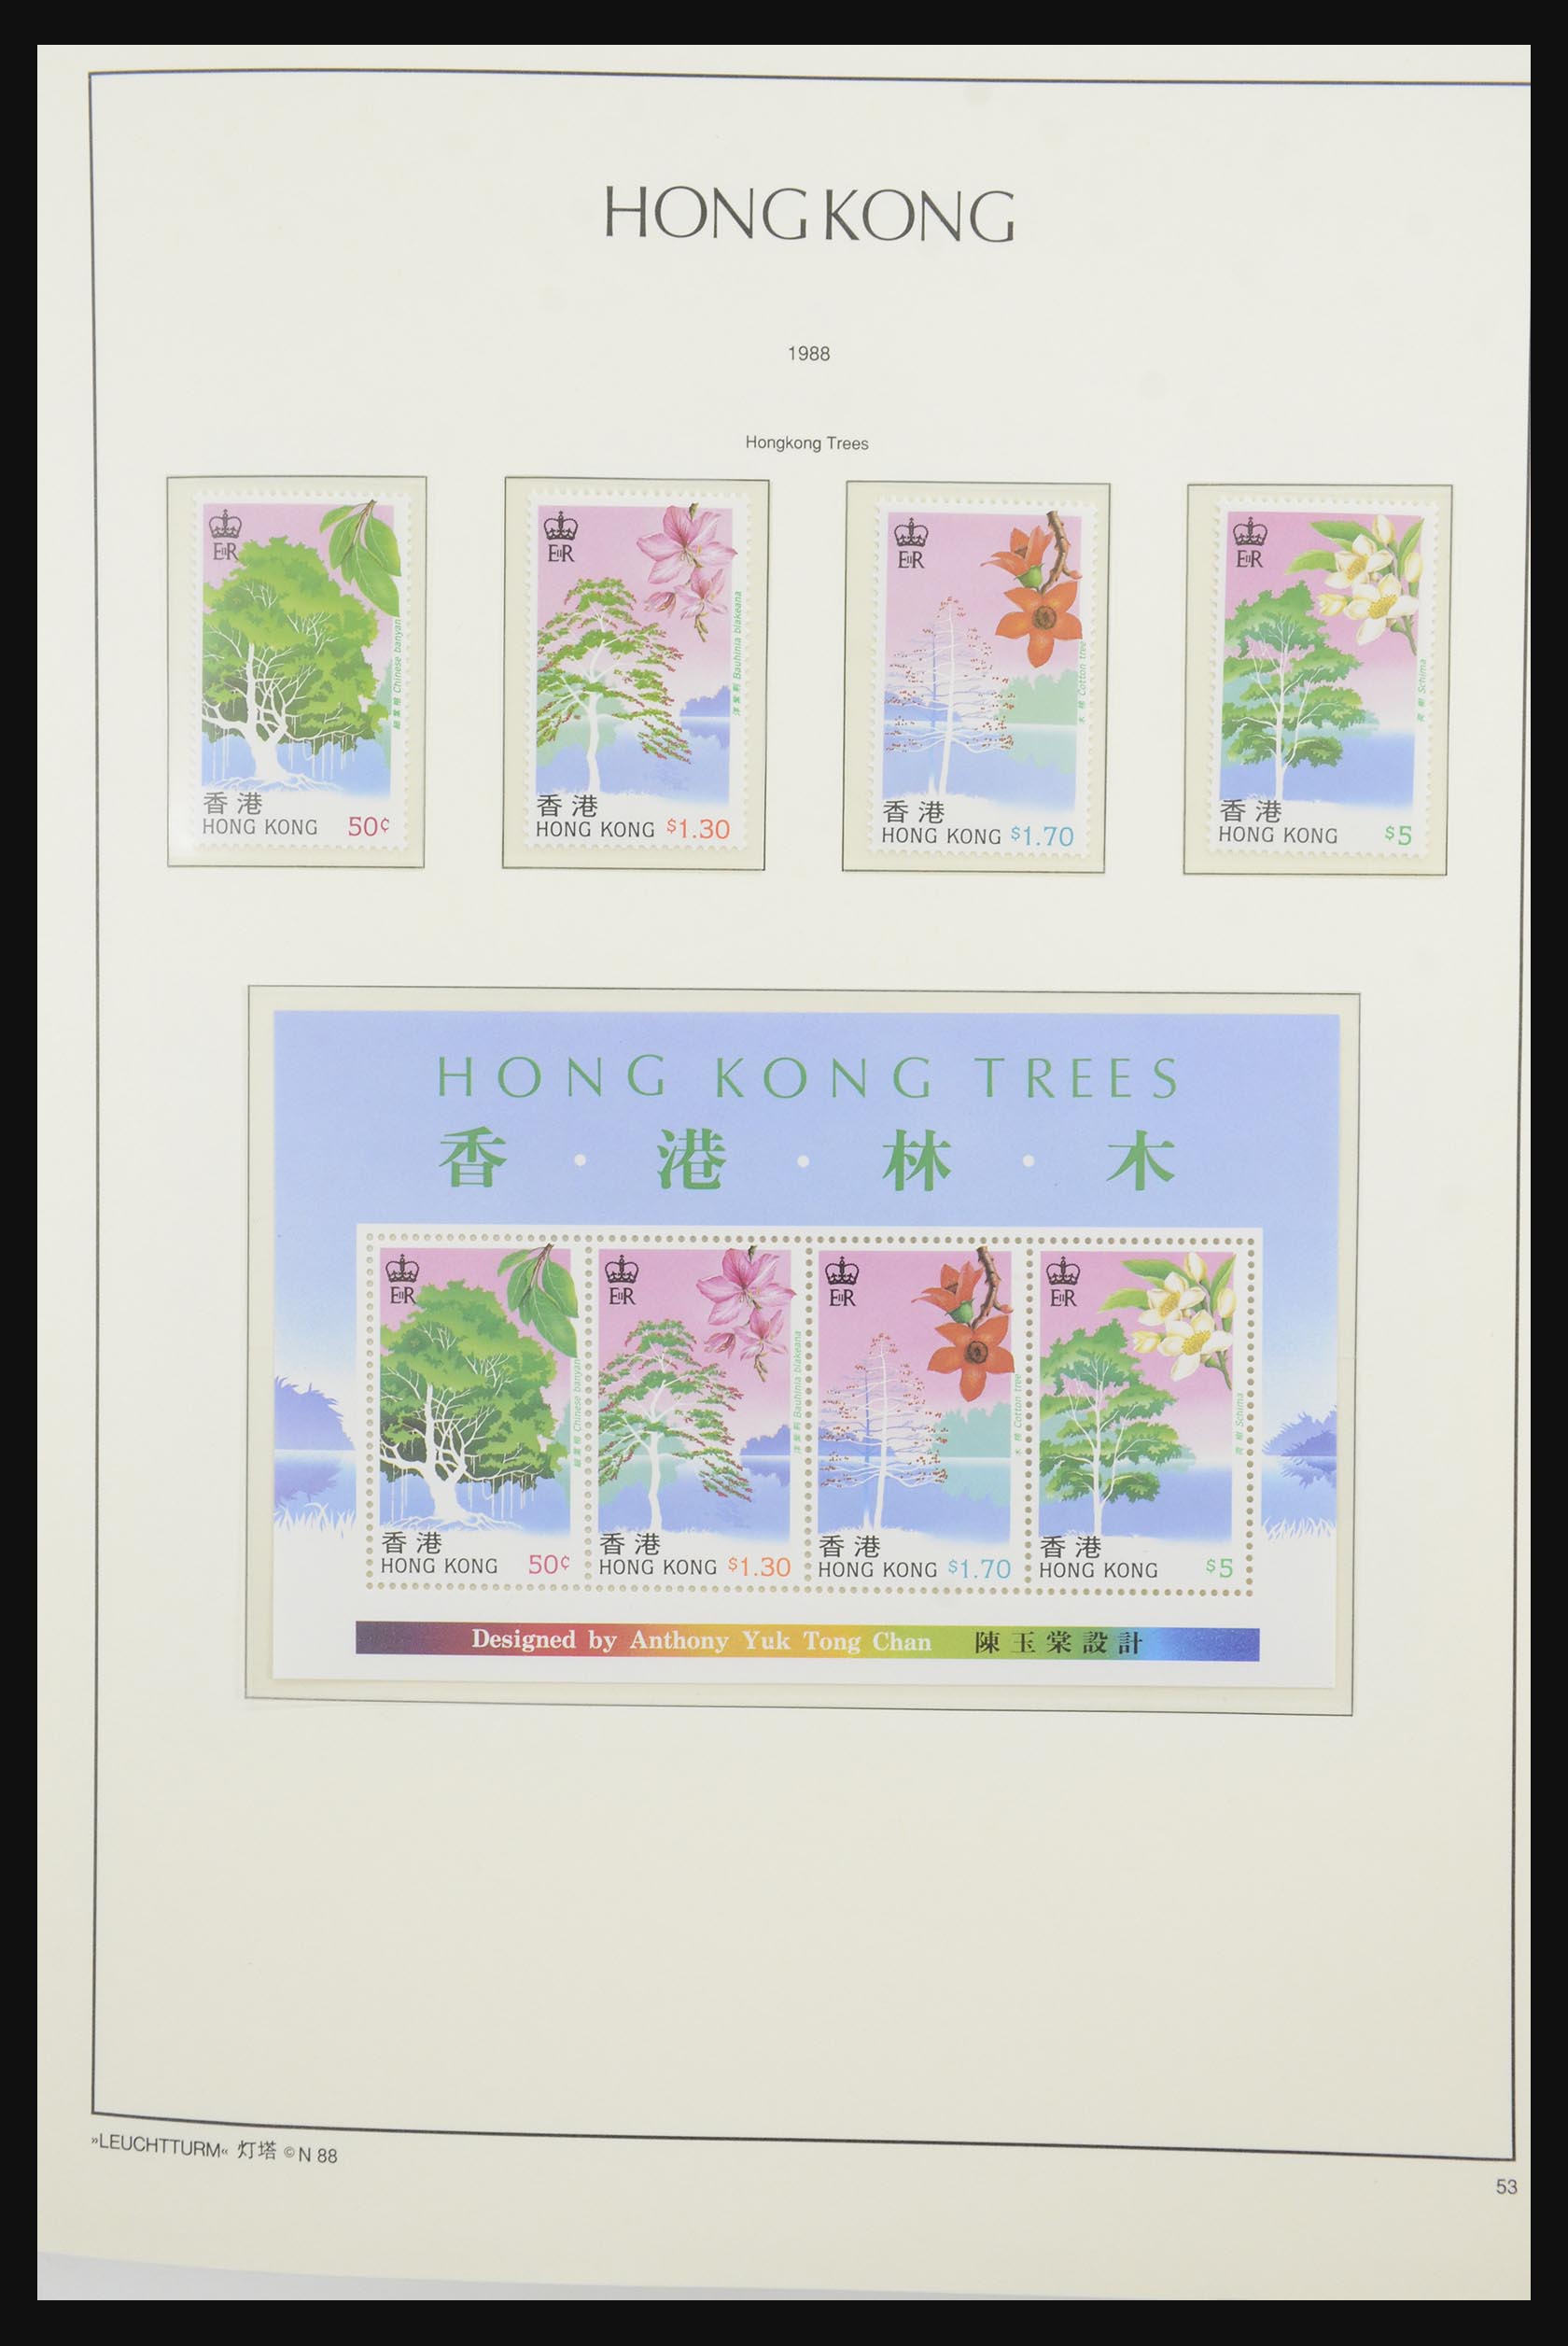 31994 029 - 31994 Hongkong 1974-2003.